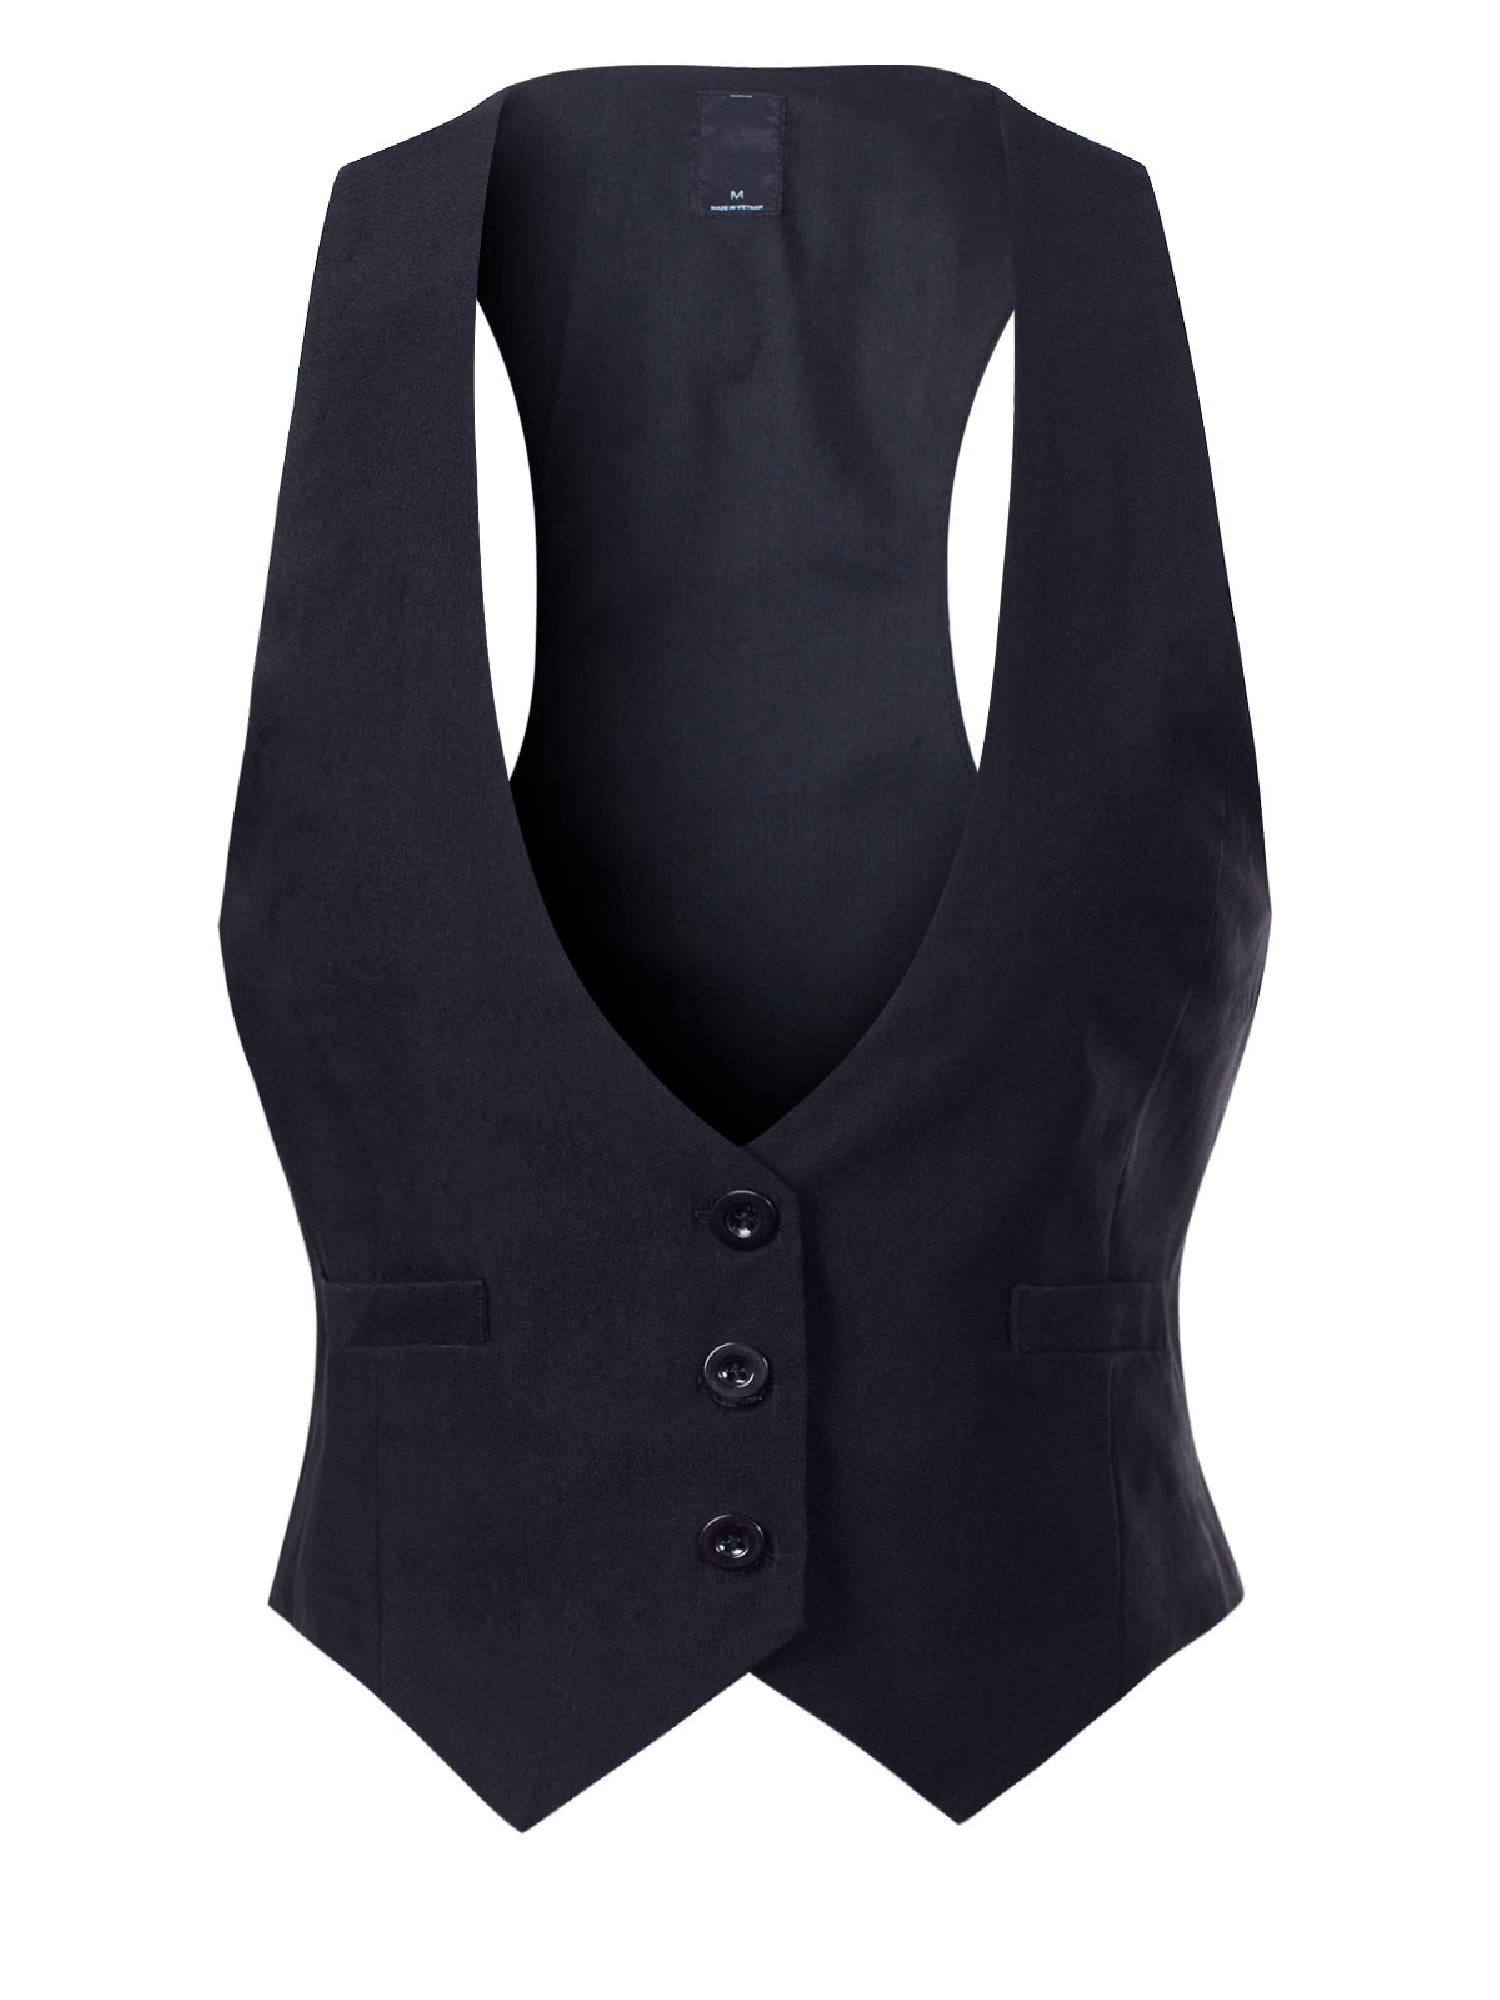 Made by Olivia Women's Casual Versatile Three Button Racerback Tuxedo Suit Waistcoat Vest